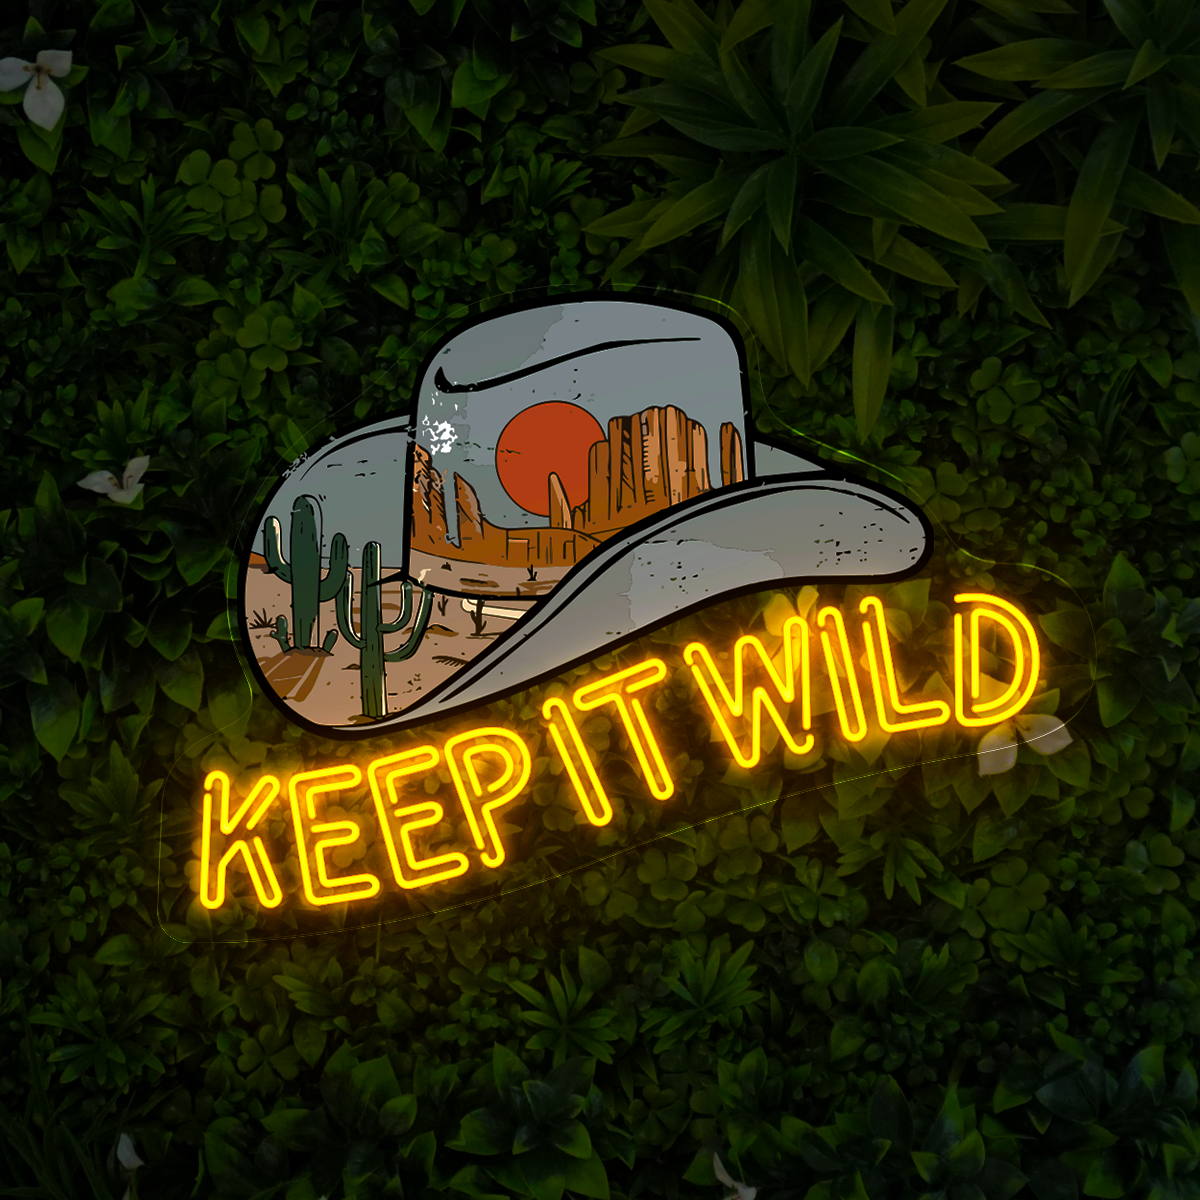 Keep It Wild Artwork Neon Sign